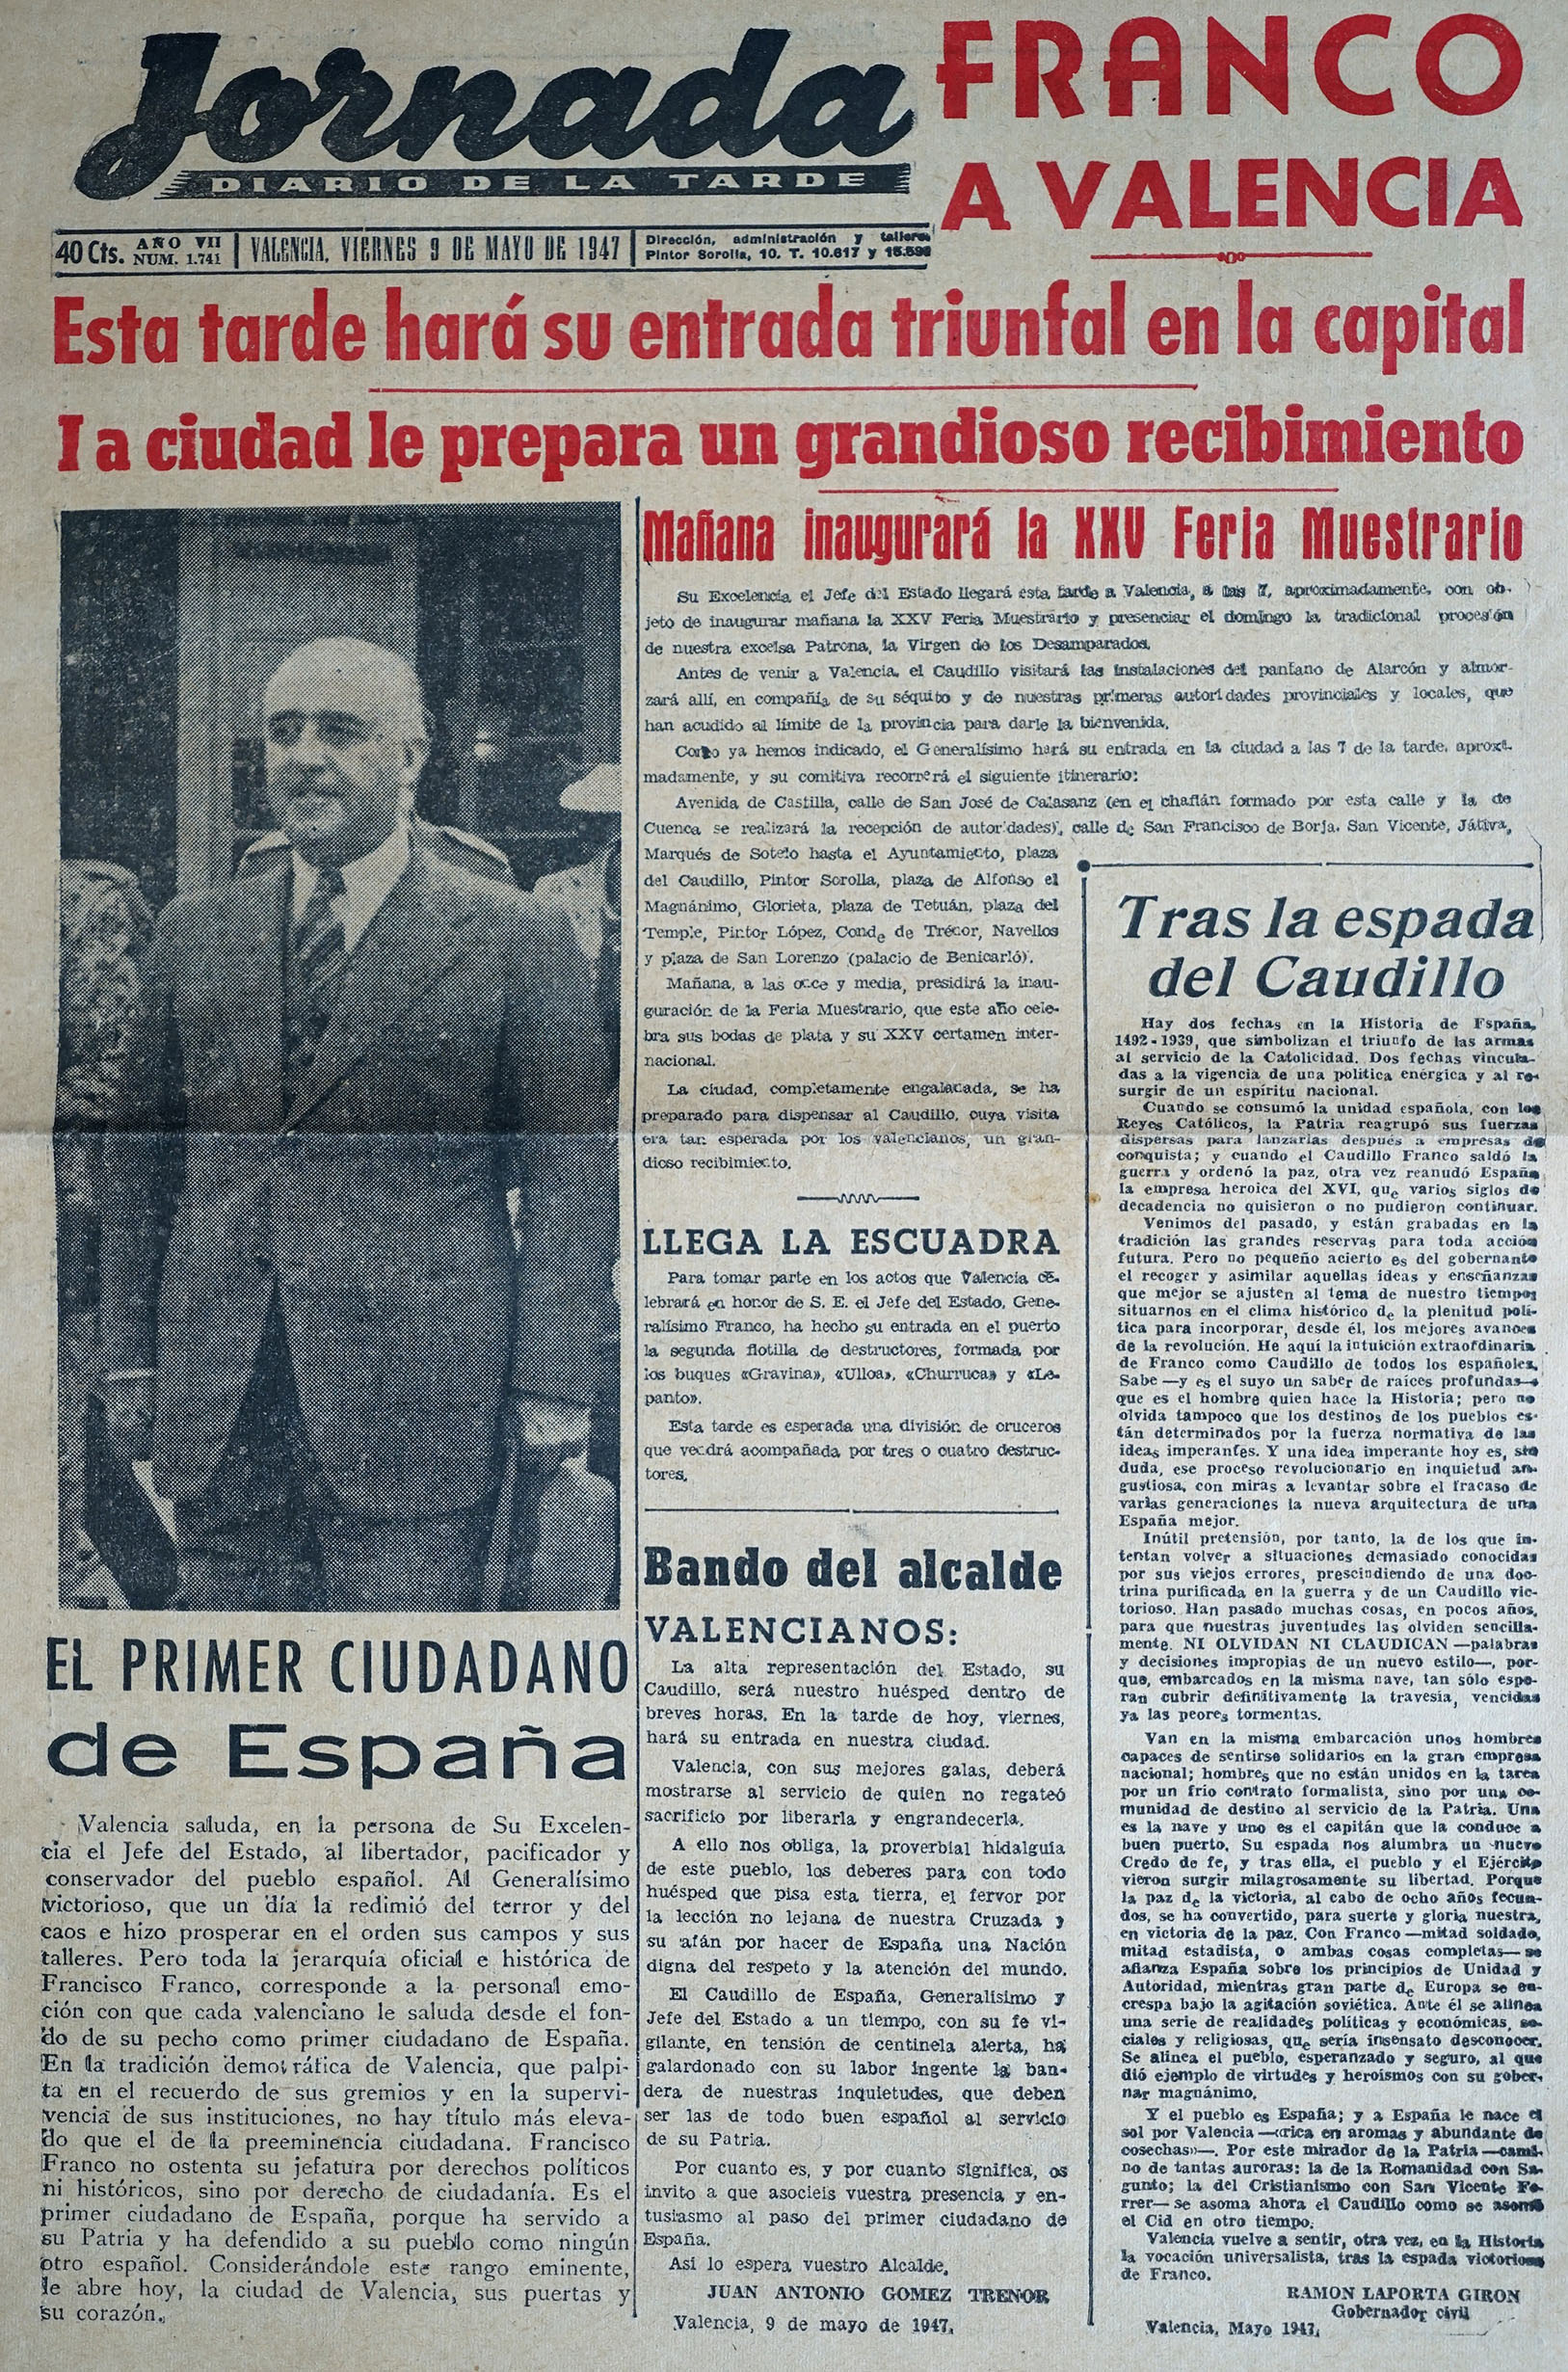 La visita de Franco a la ciutat en 1947